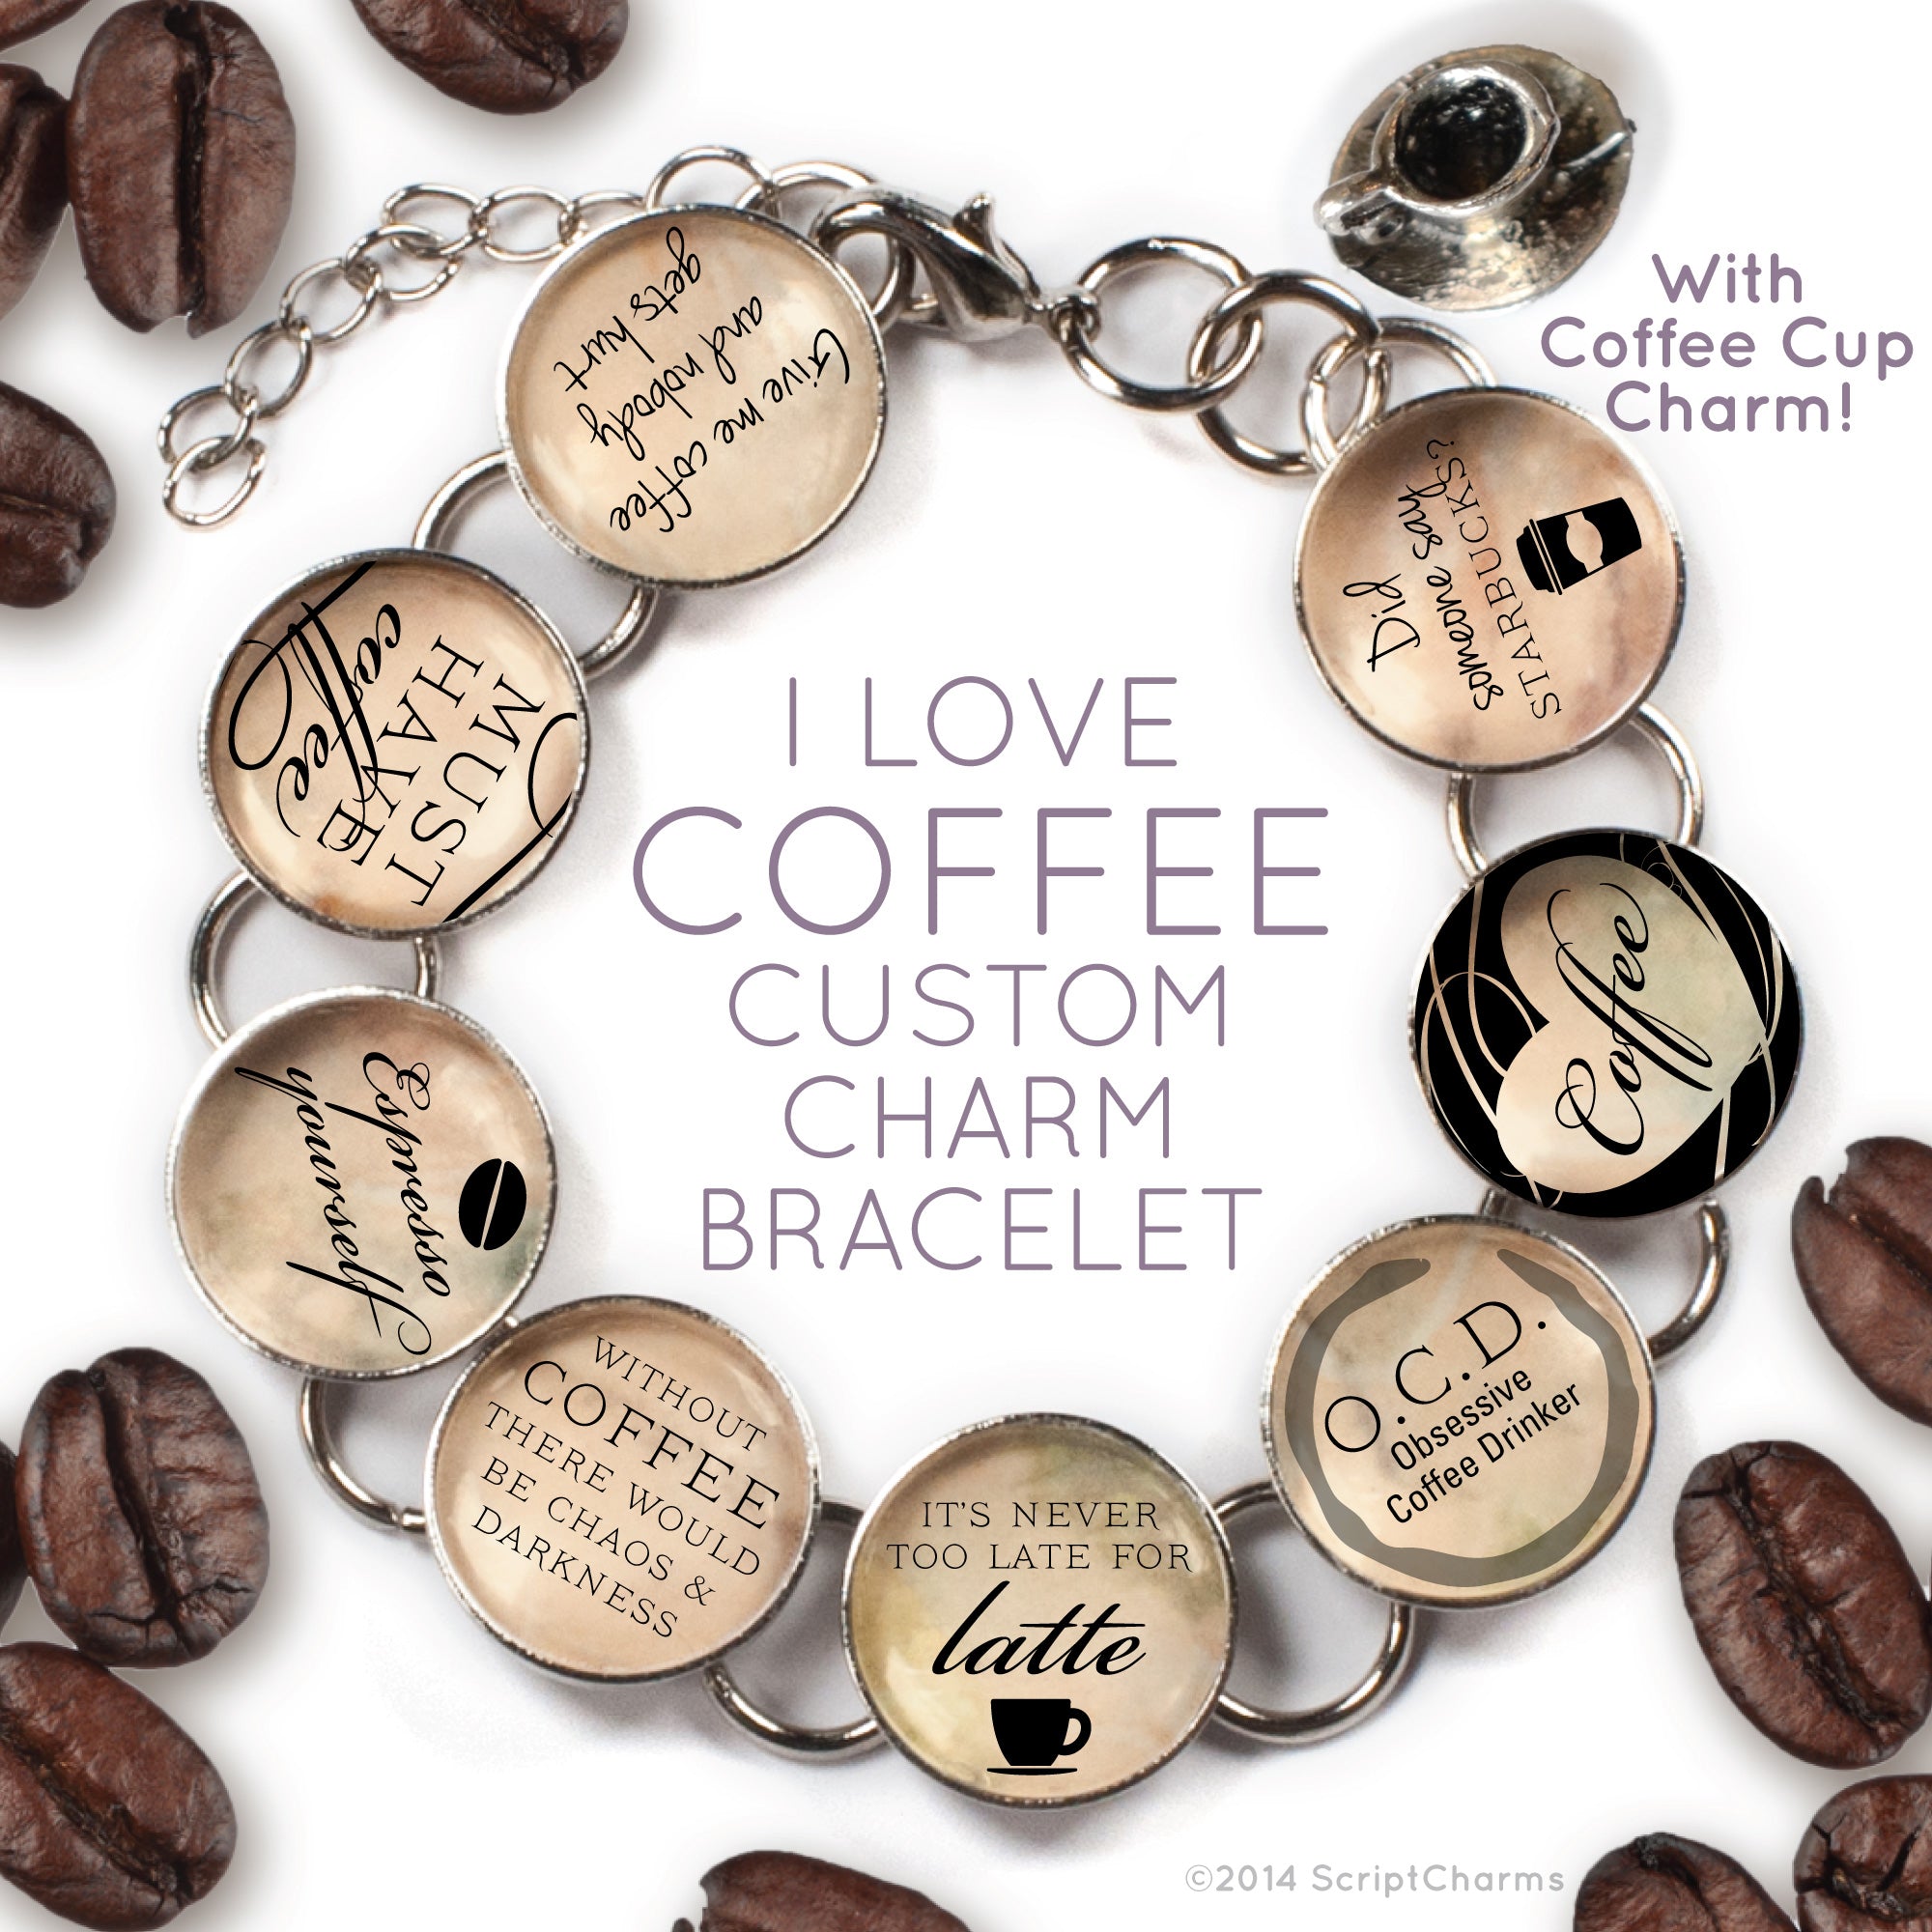 I Love Coffee - Custom Glass Charm Bracelet with Coffee Cup Charm As Shown